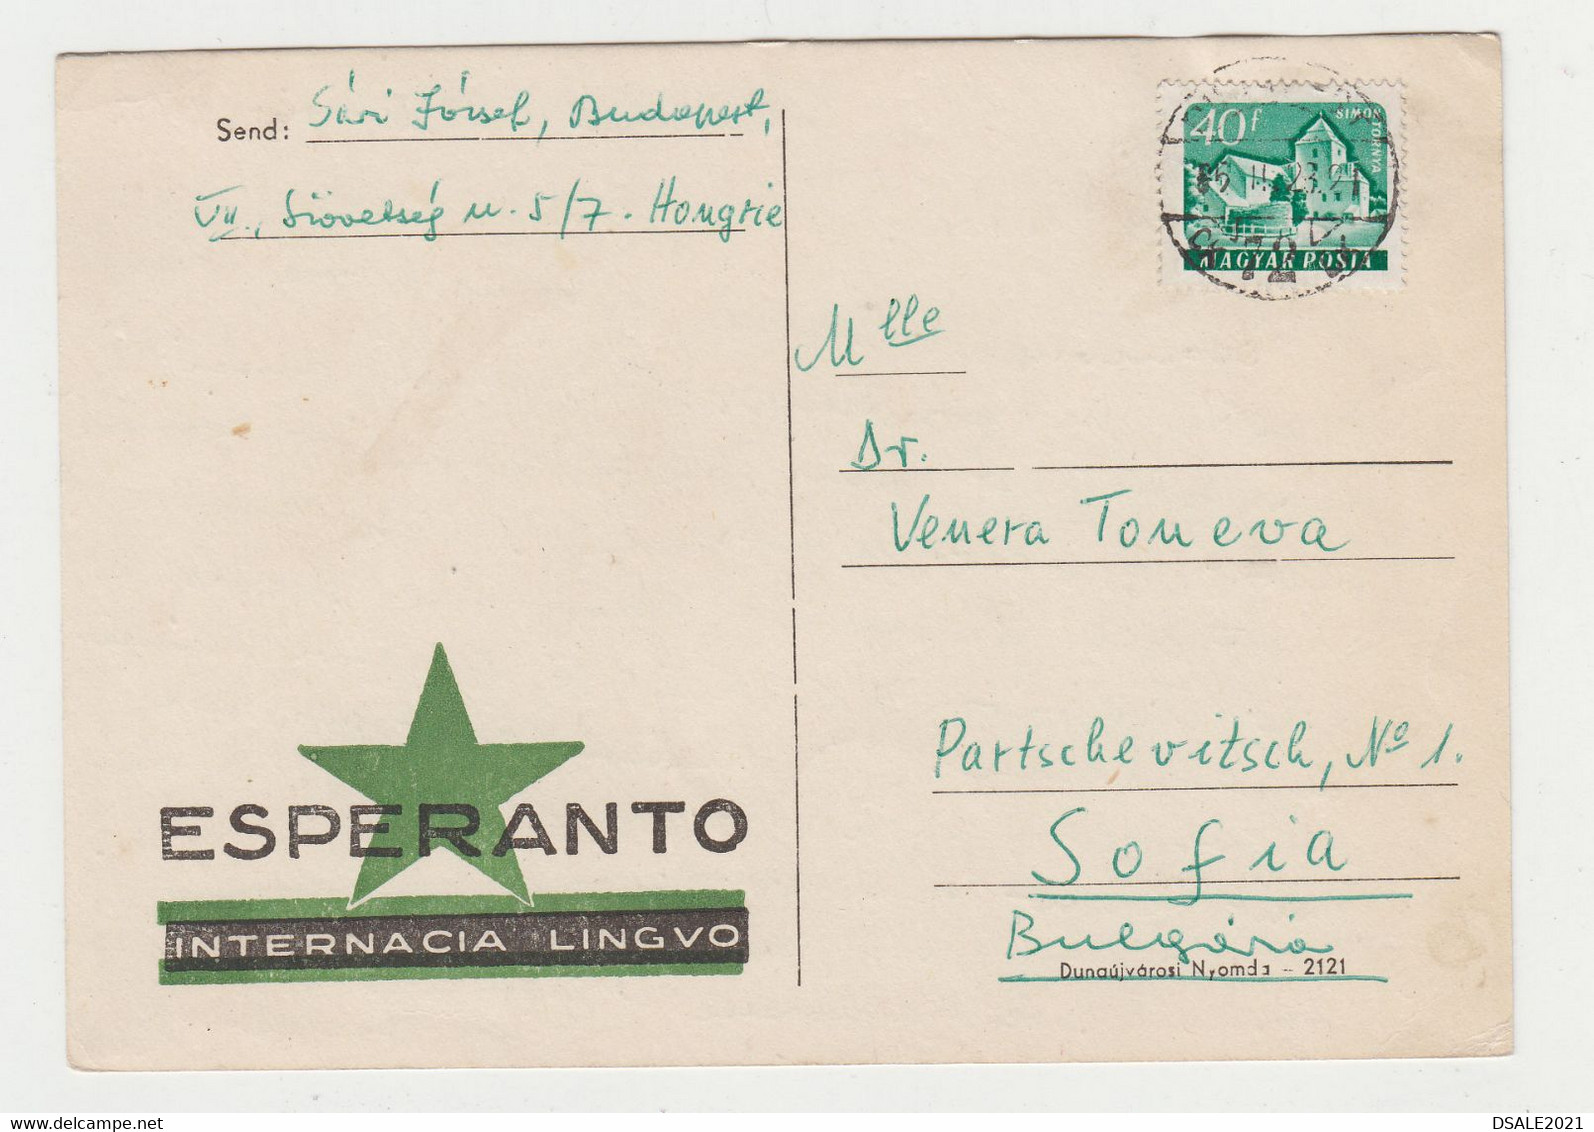 Hungary 1965 Nice ESPERANTO Postal Card Sent Abroad To Bulgaria Bulgarie (4956) - Covers & Documents